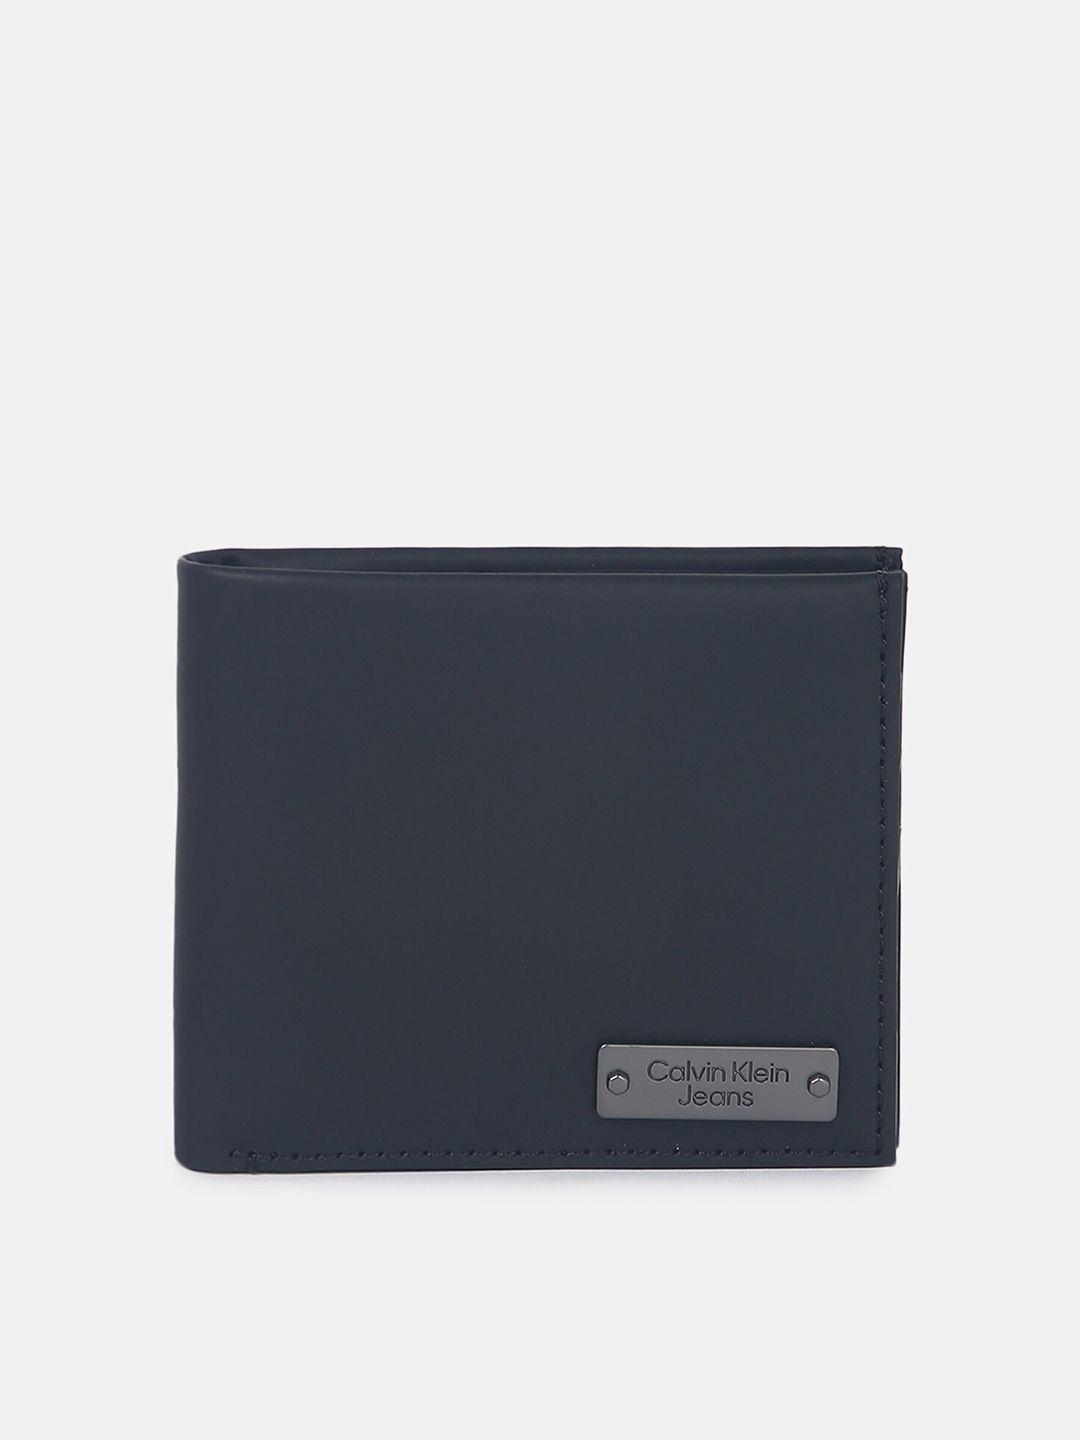 Calvin Klein Jeans Men Leather Two Fold Wallet